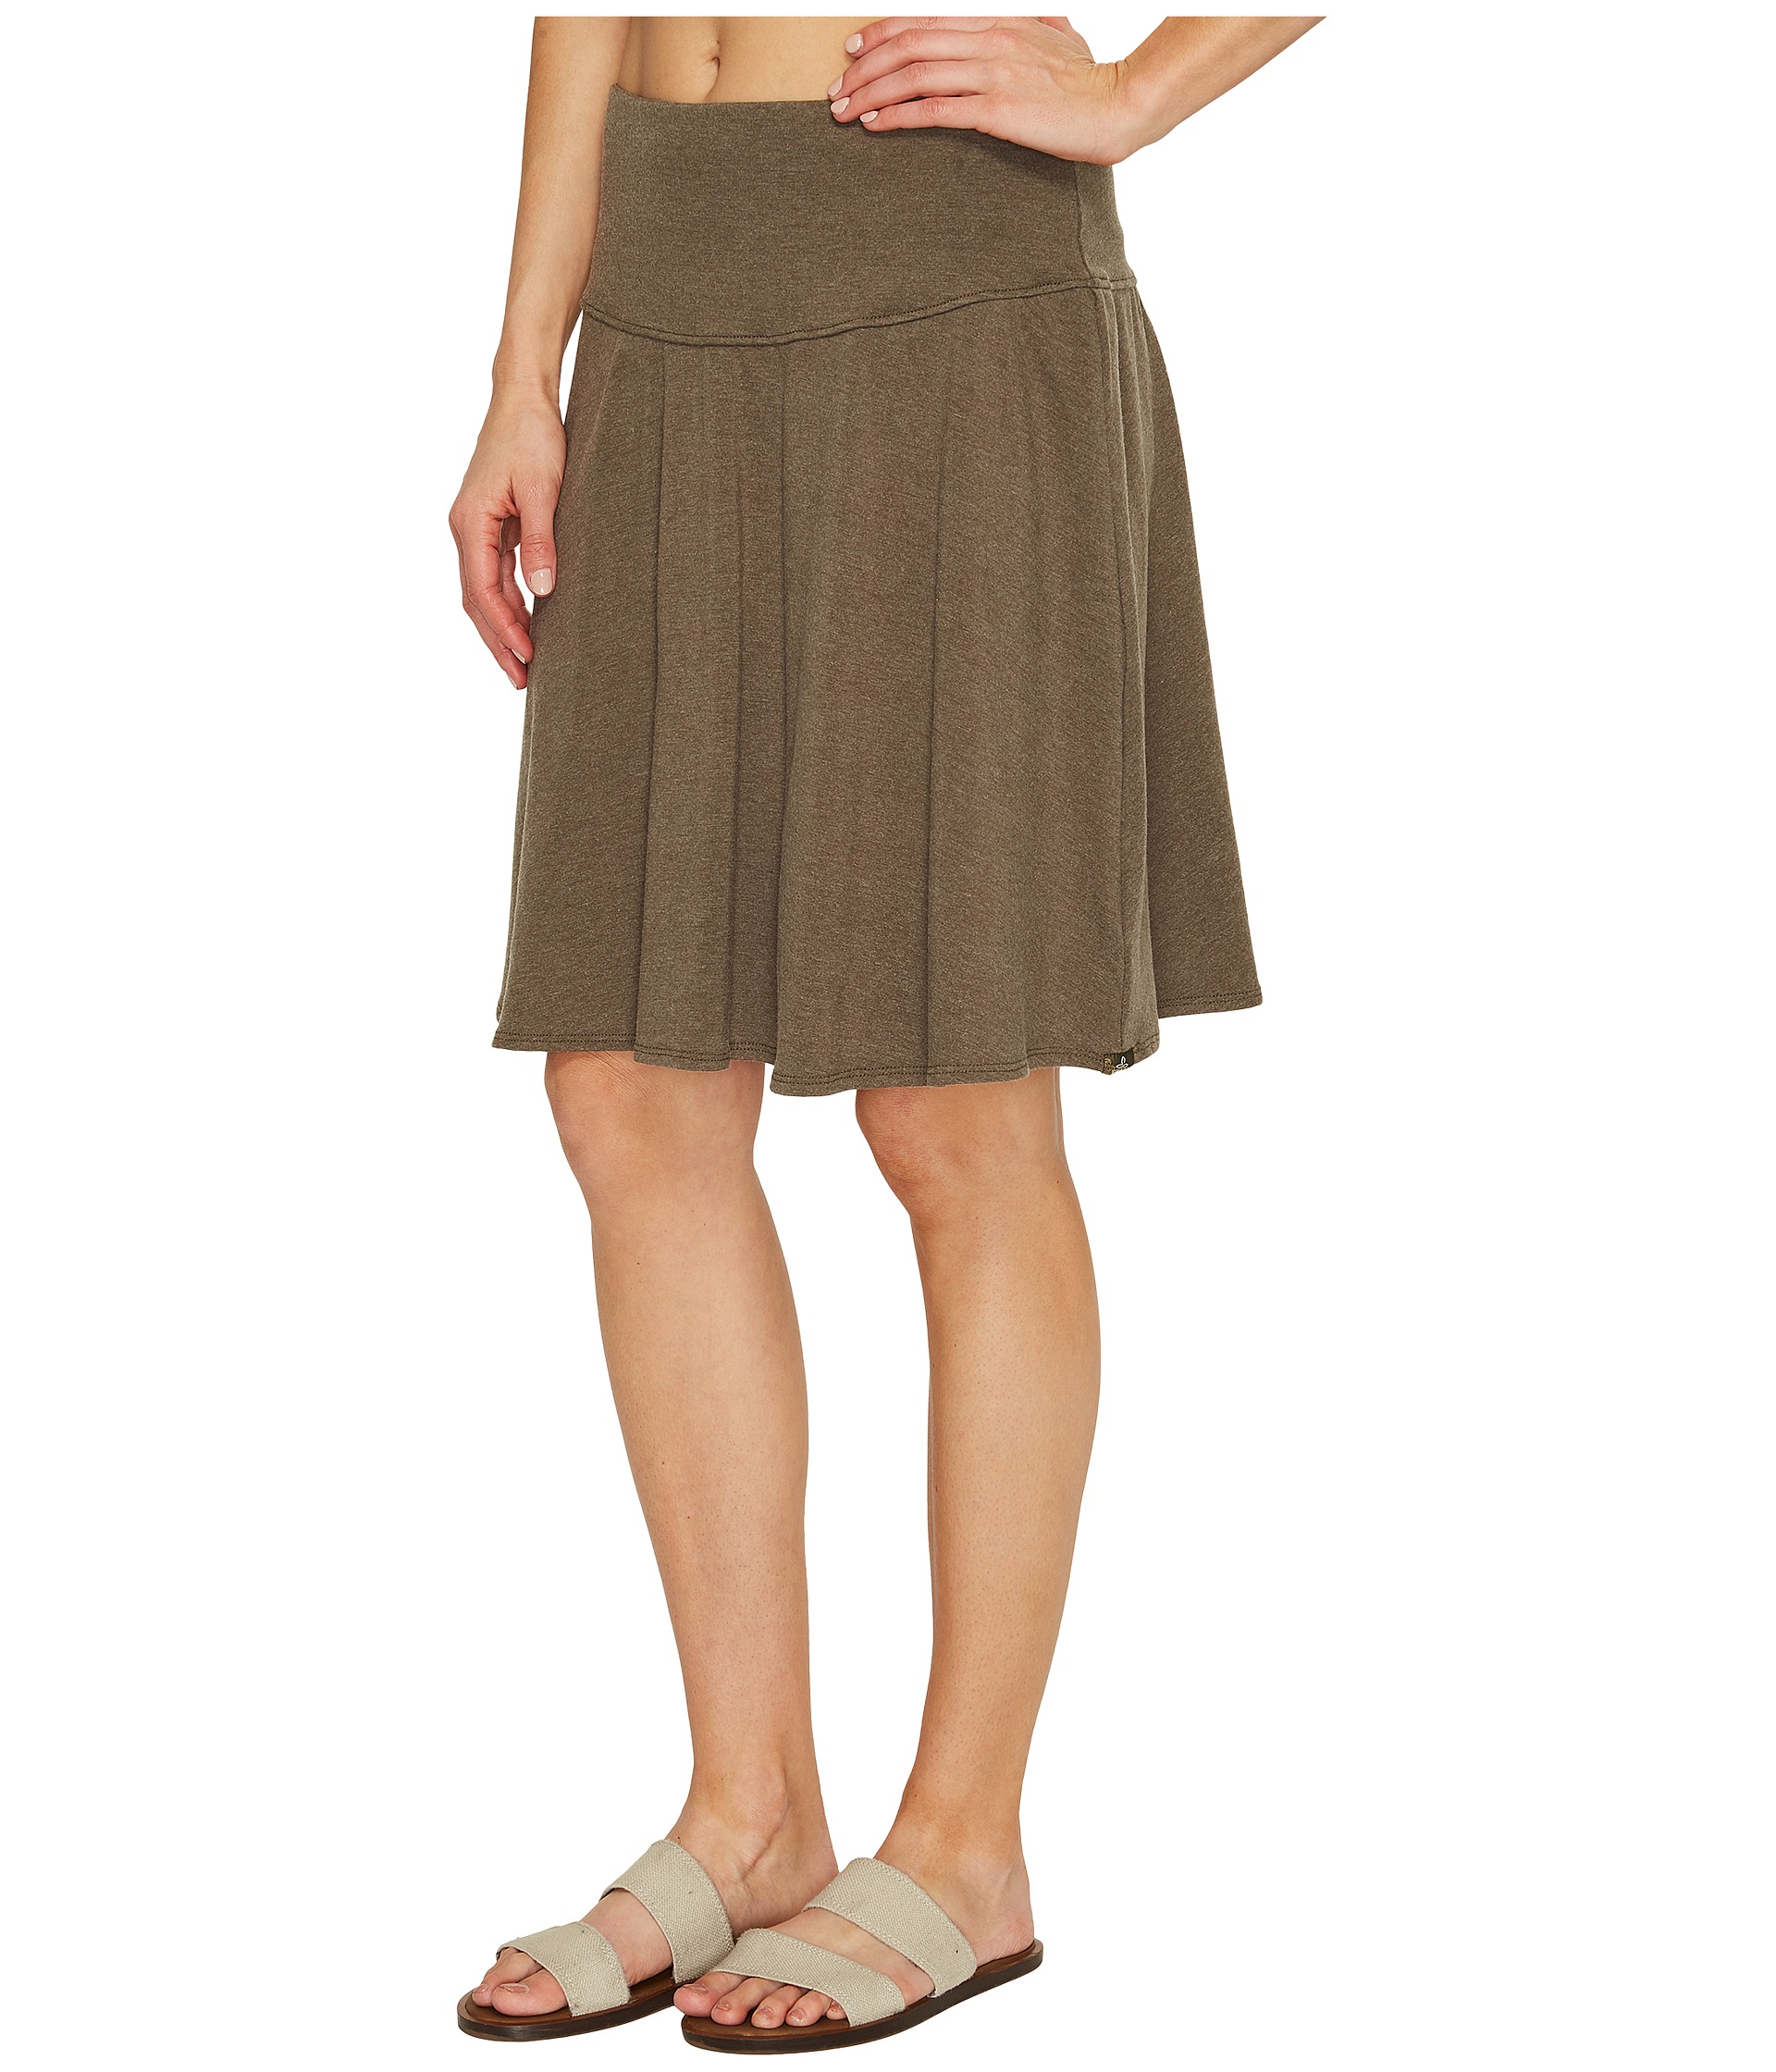 Prana Taj Skirt at Zappos.com